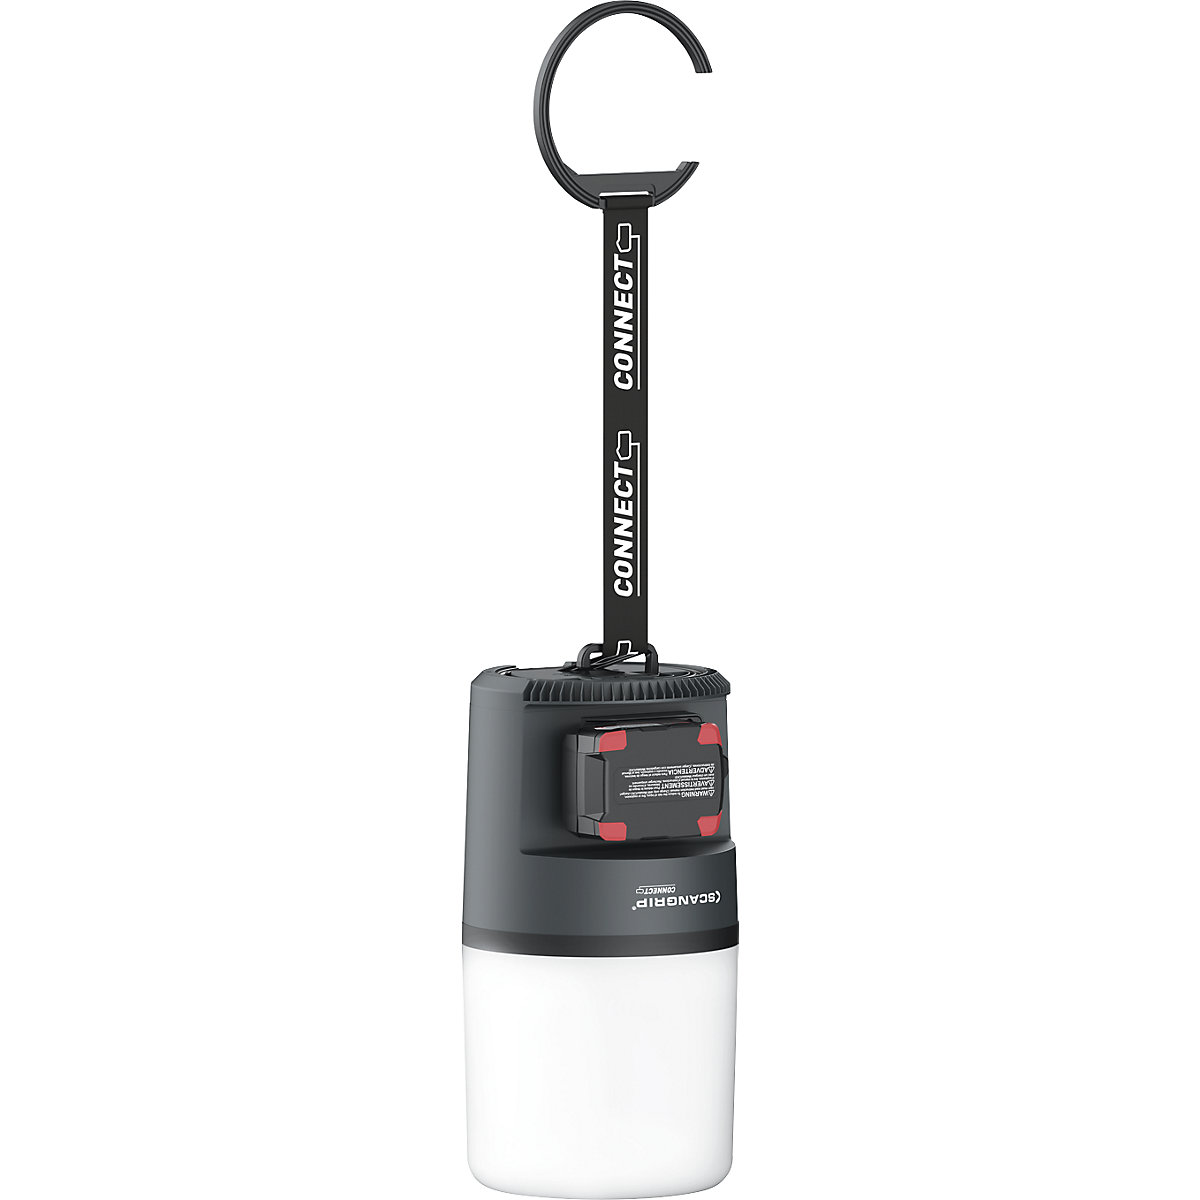 Lampa robocza LED AREA 6 CONNECT – SCANGRIP (Zdjęcie produktu 17)-16